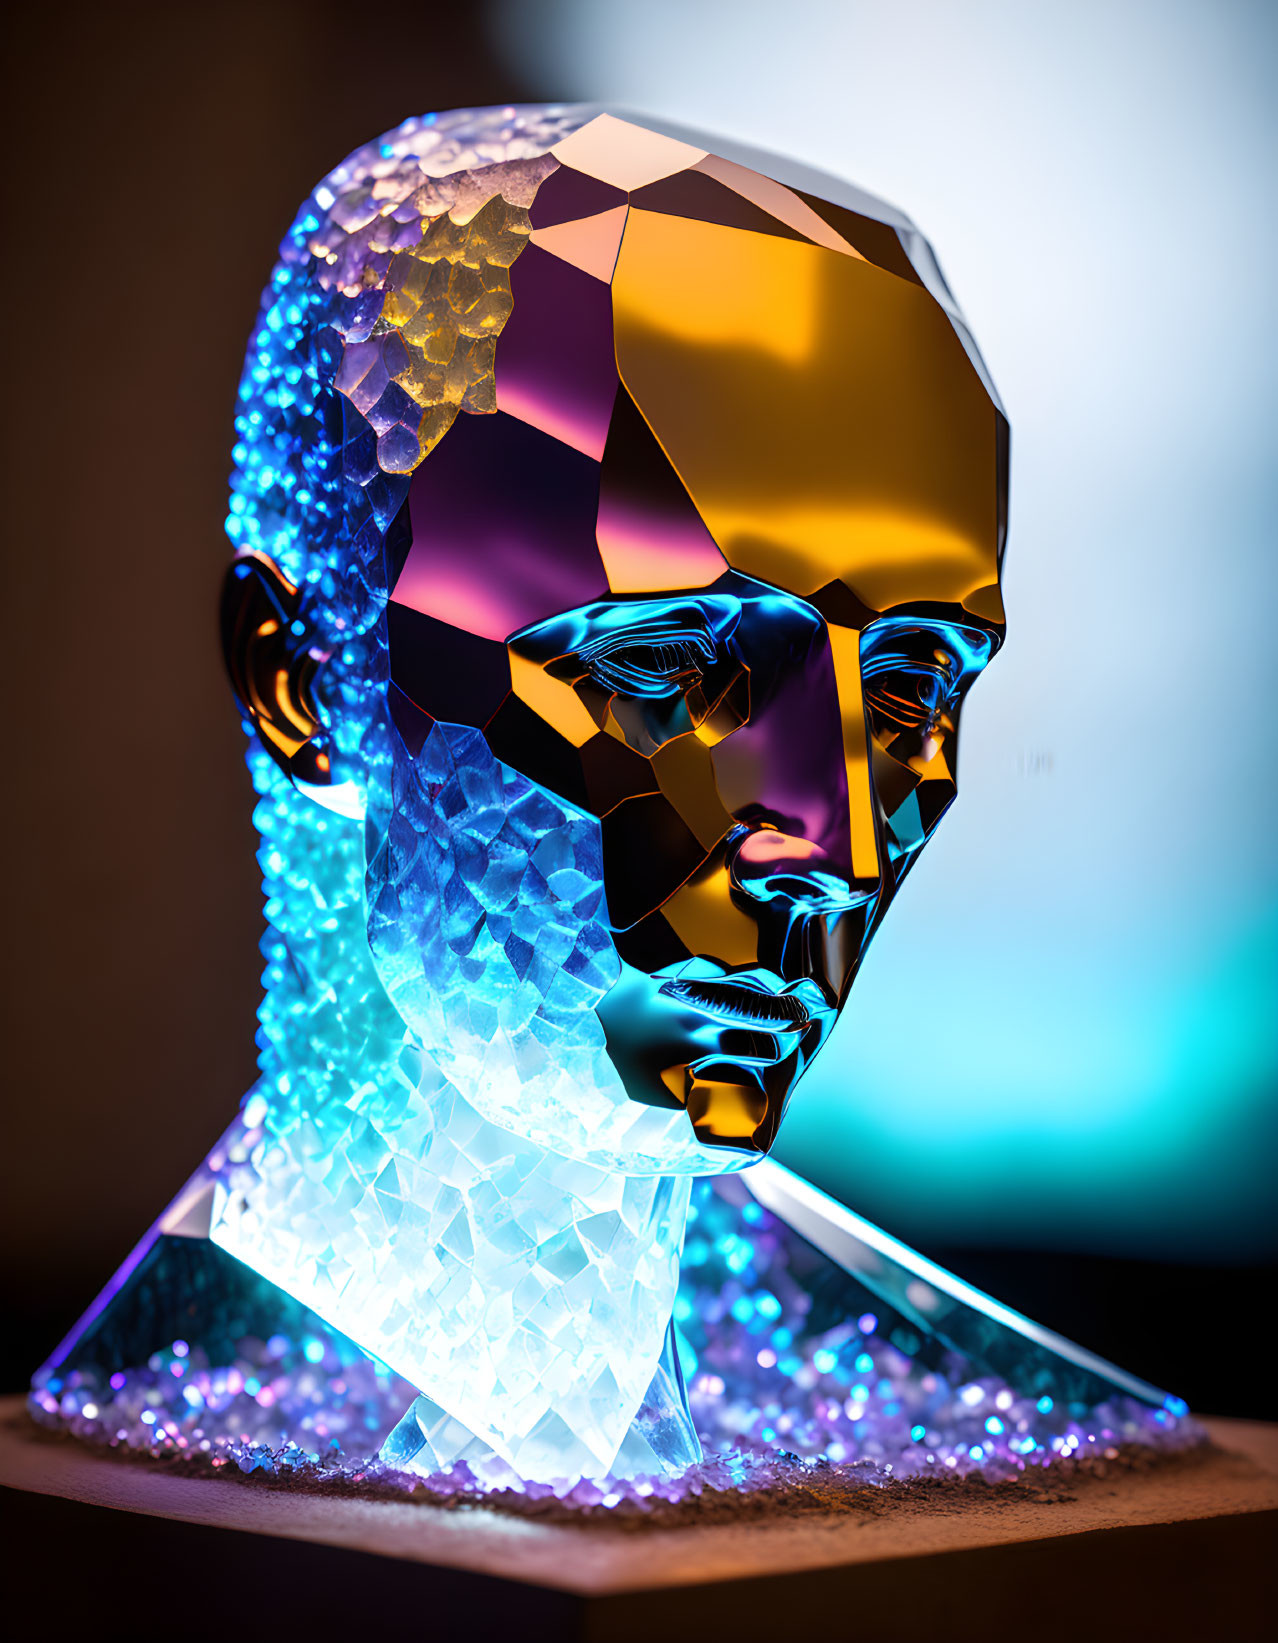 Putin sculpture made of glowing broken glass and g